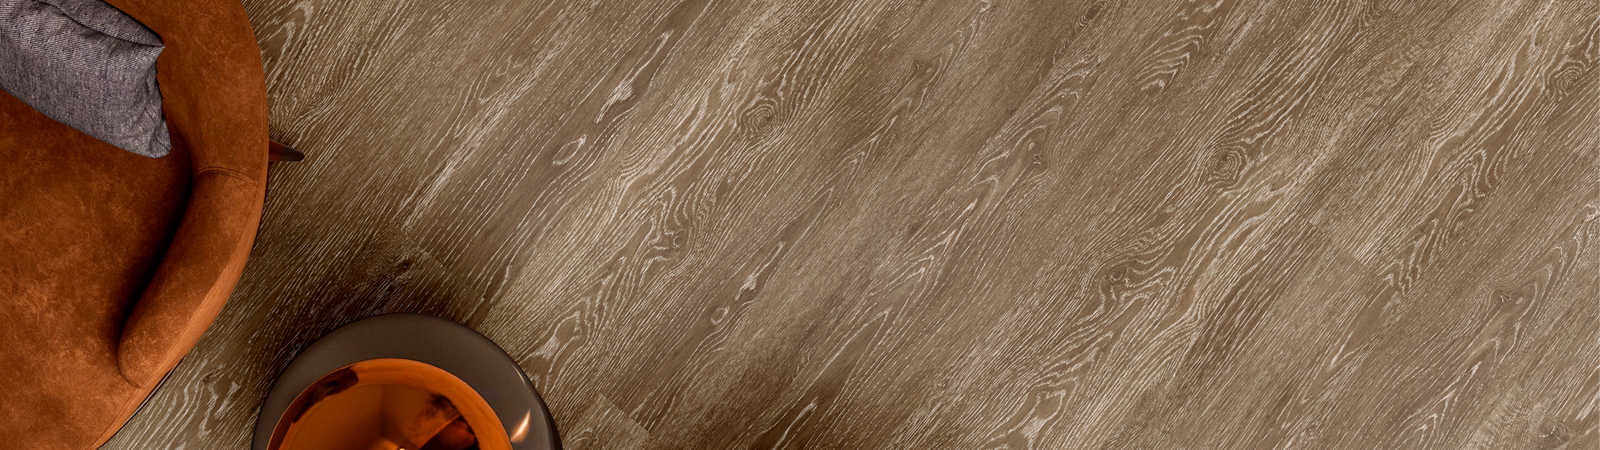 Fade Resistant Cork Flooring Blog